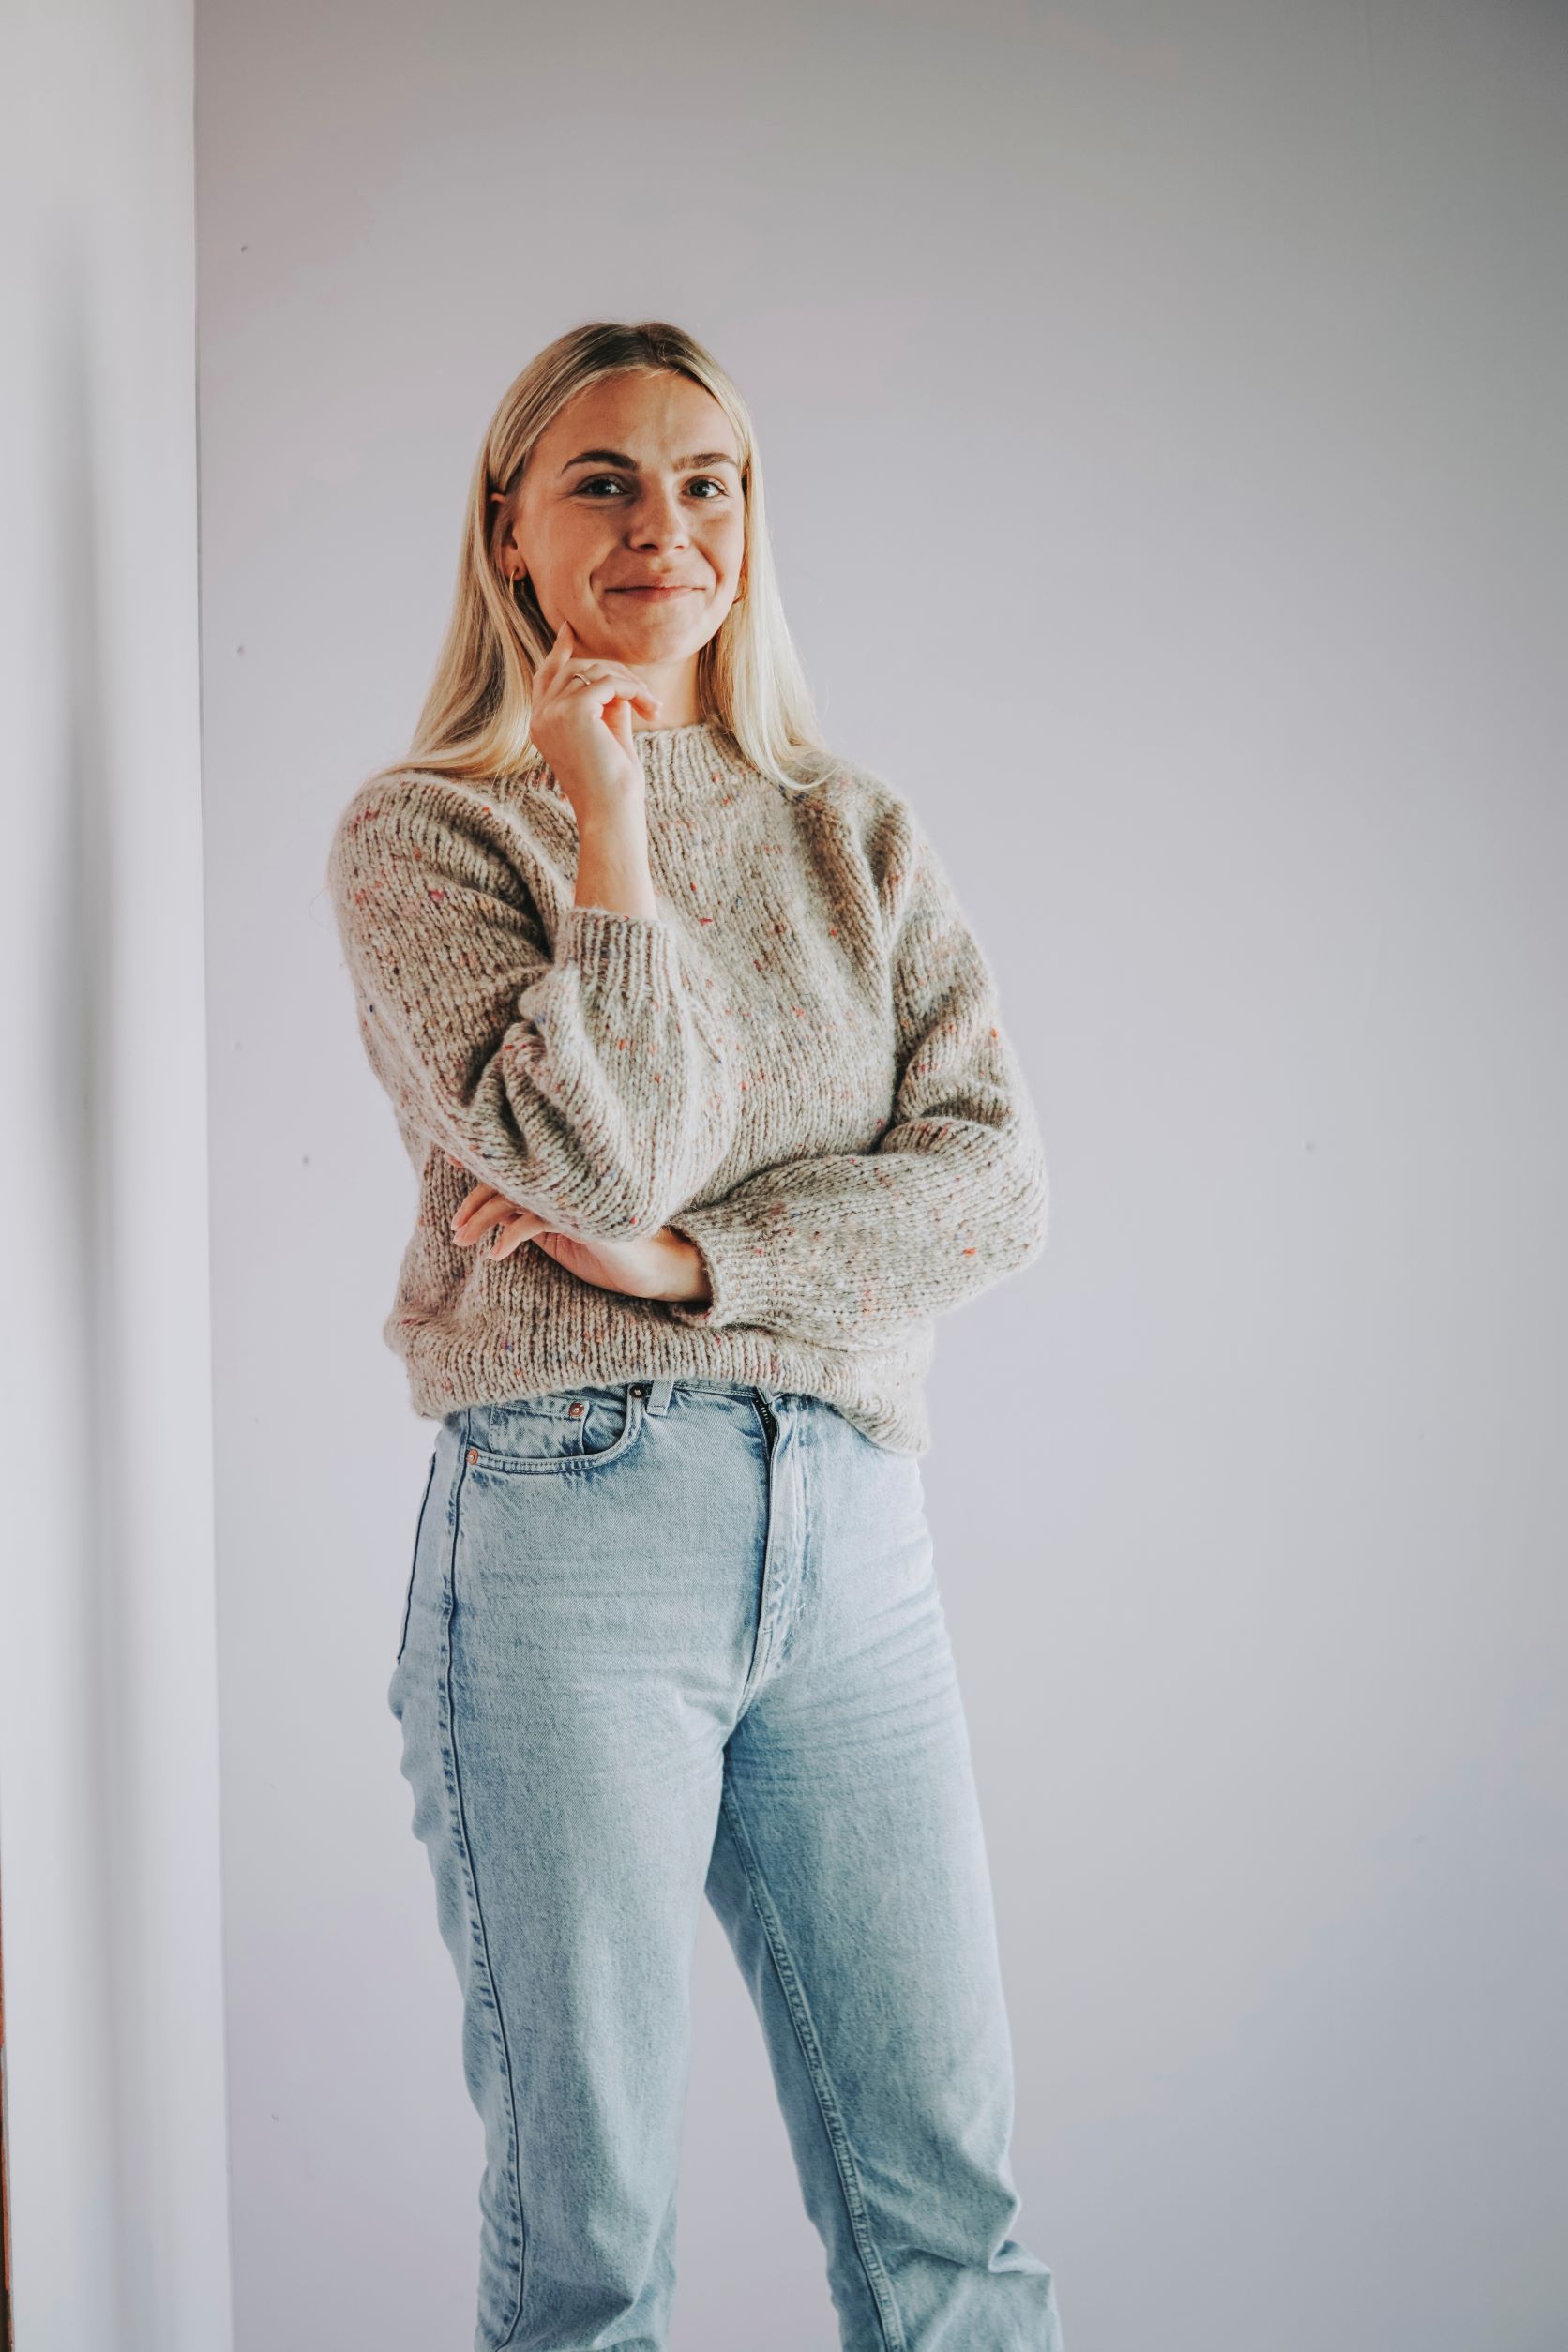 Har du aldrig strikket Så du begynde med femina-sweateren | Femina